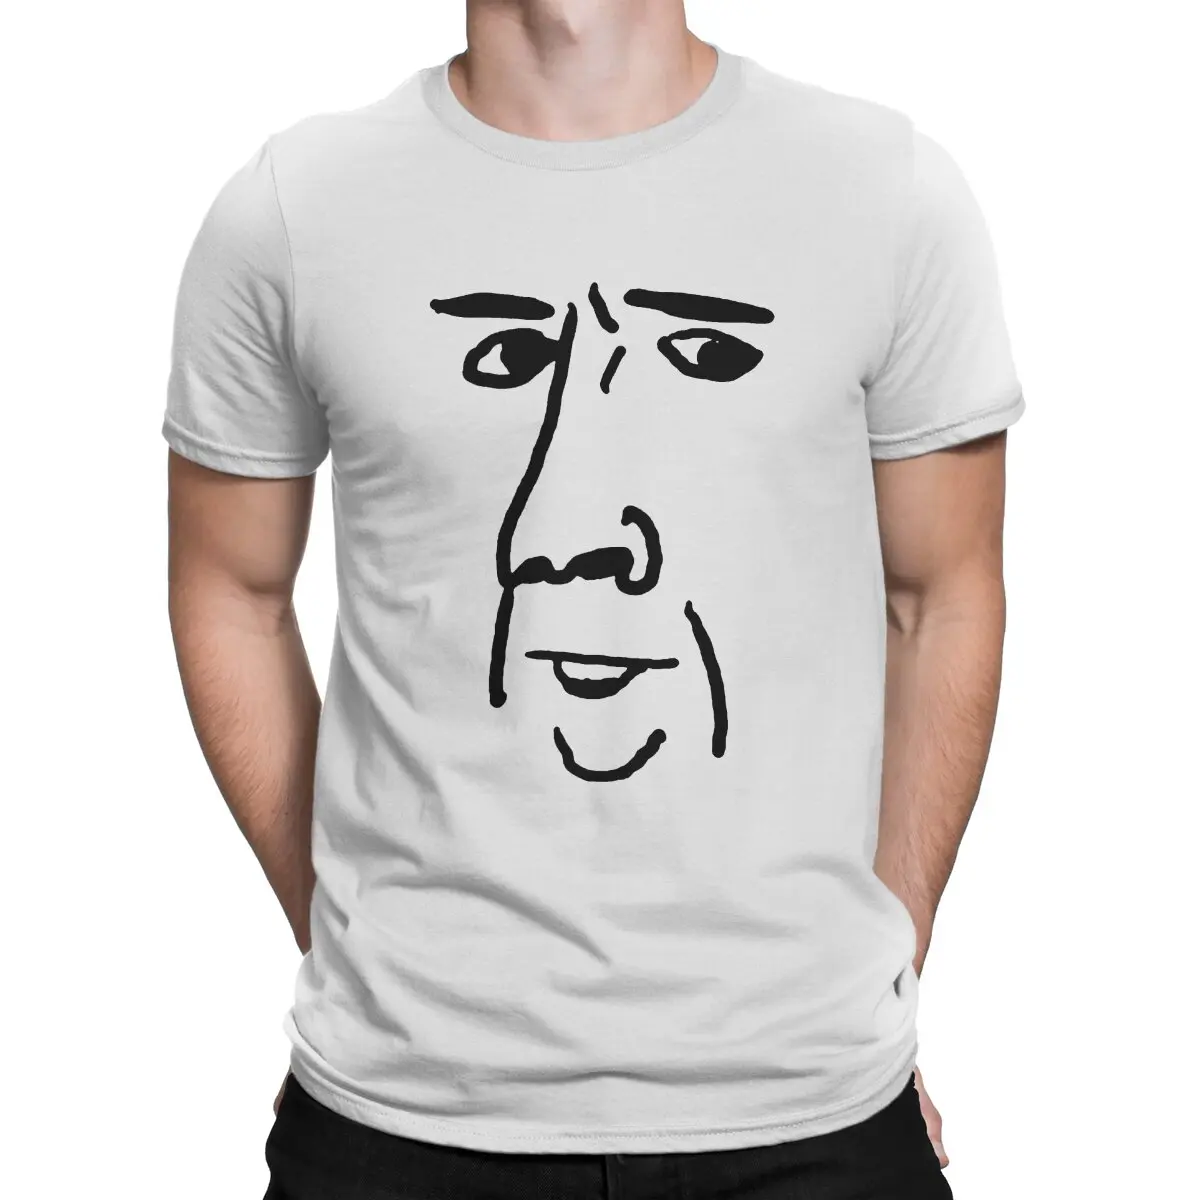 

Face Men's T Shirt The Unbearable Weight of Massive Talent Movie Funny Tee Shirt Short Sleeve Crewneck T-Shirts Cotton Gift Idea